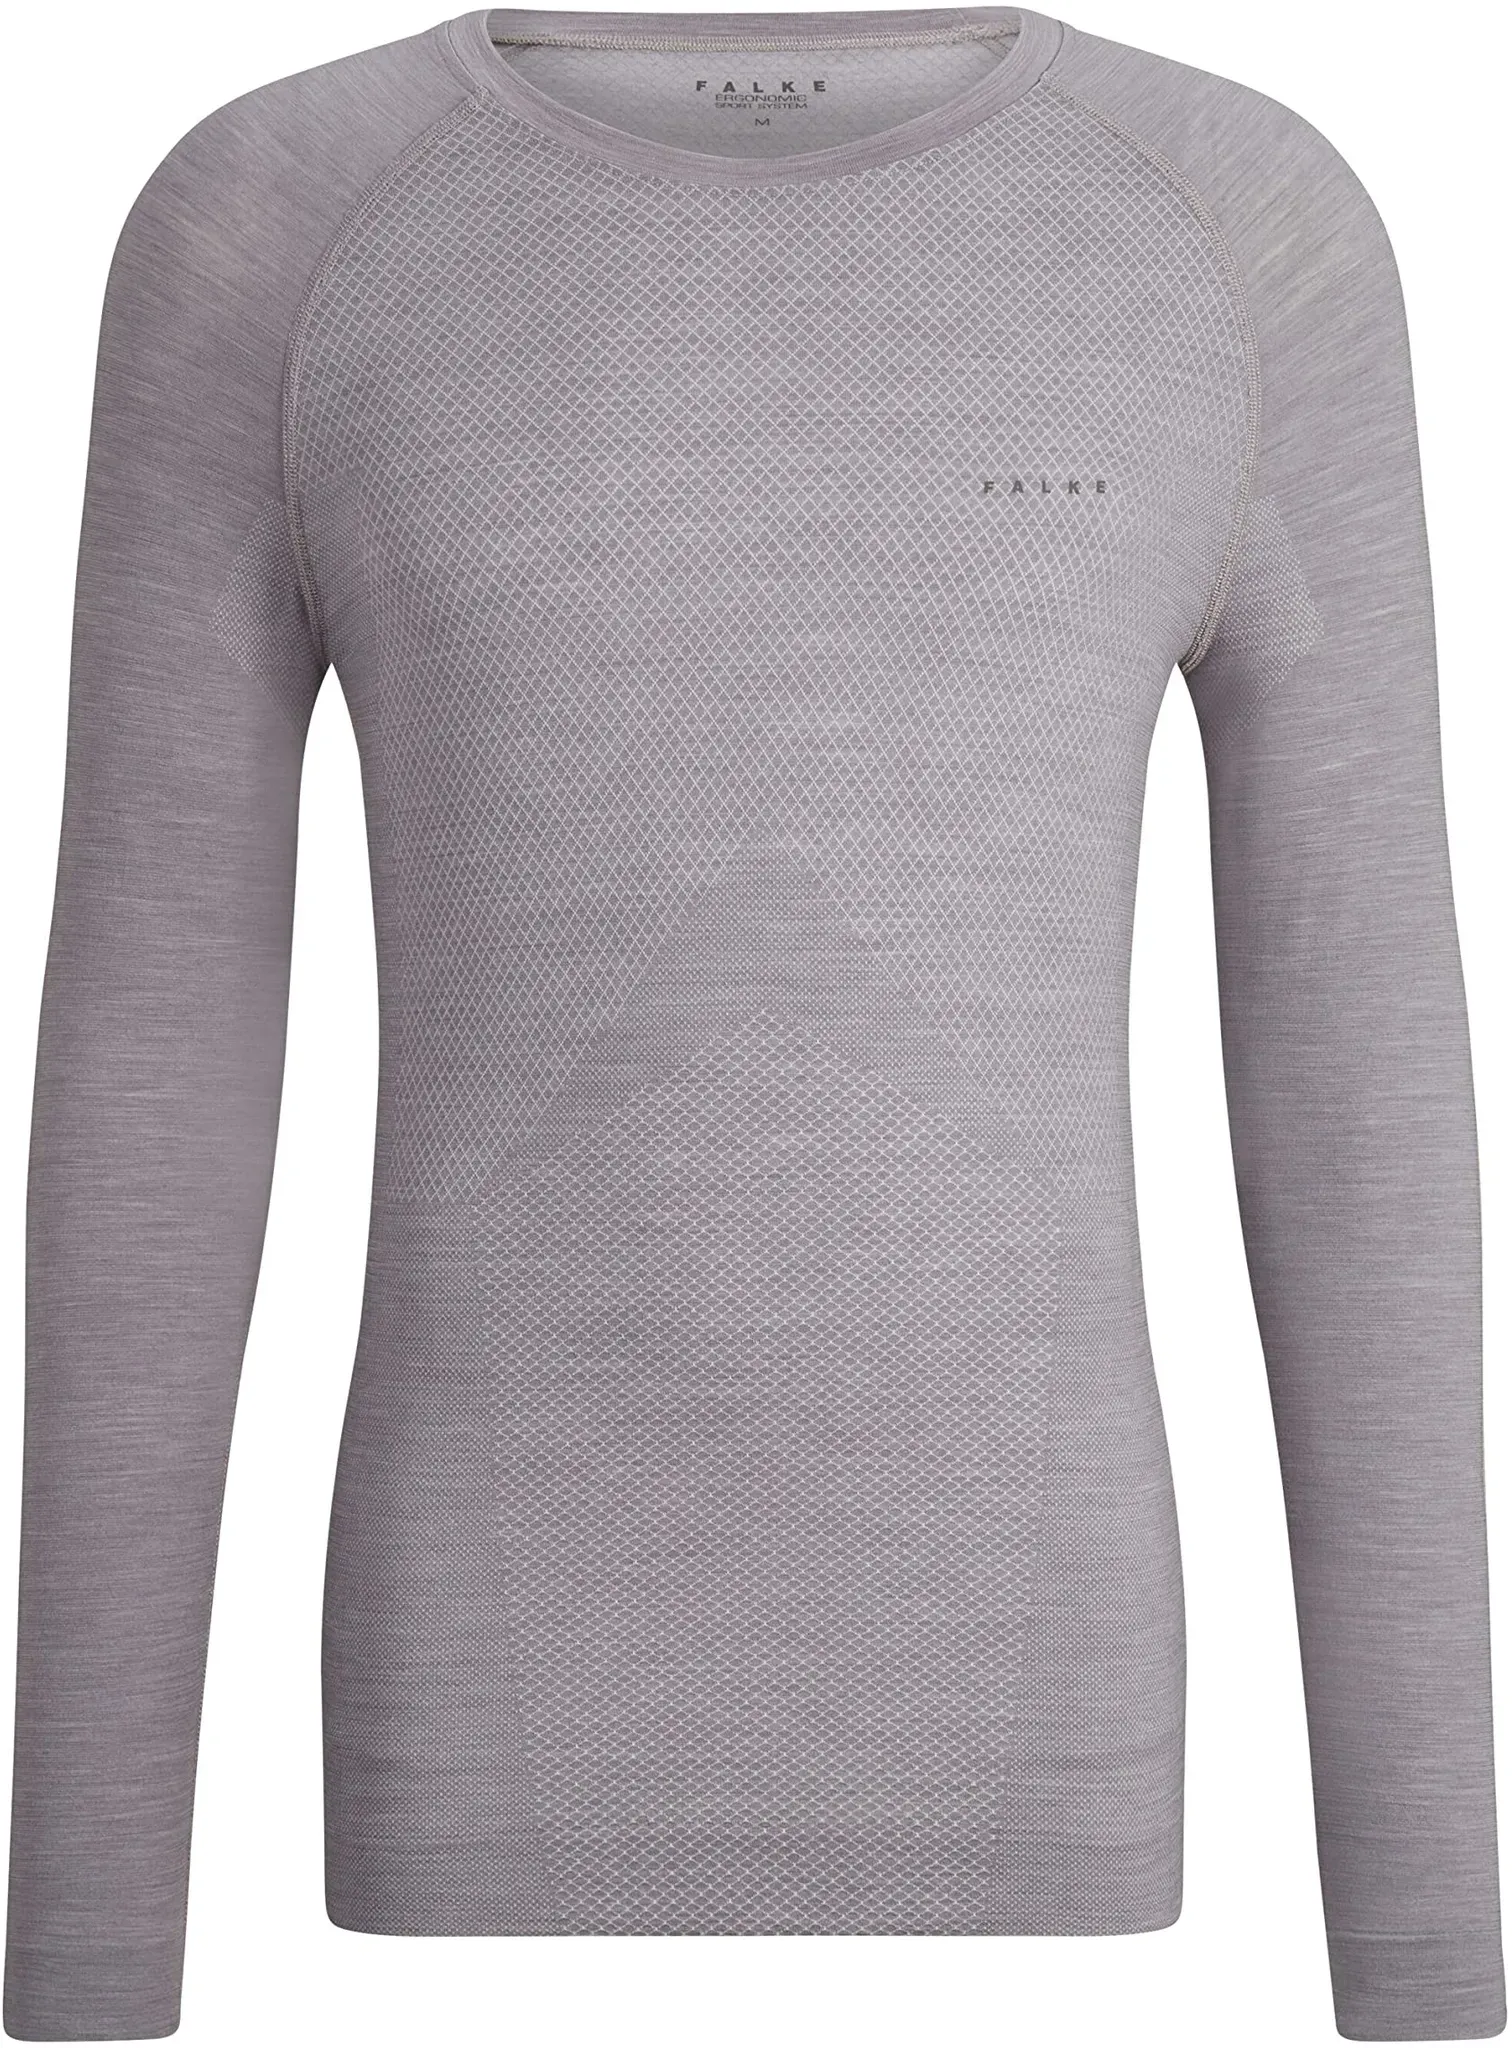 FALKE Herren Baselayer-Shirt Wool-Tech Light Round Neck M L/S SH Wolle Schnelltrocknend 1 Stück, Grau (Grey-Heather 3757), L